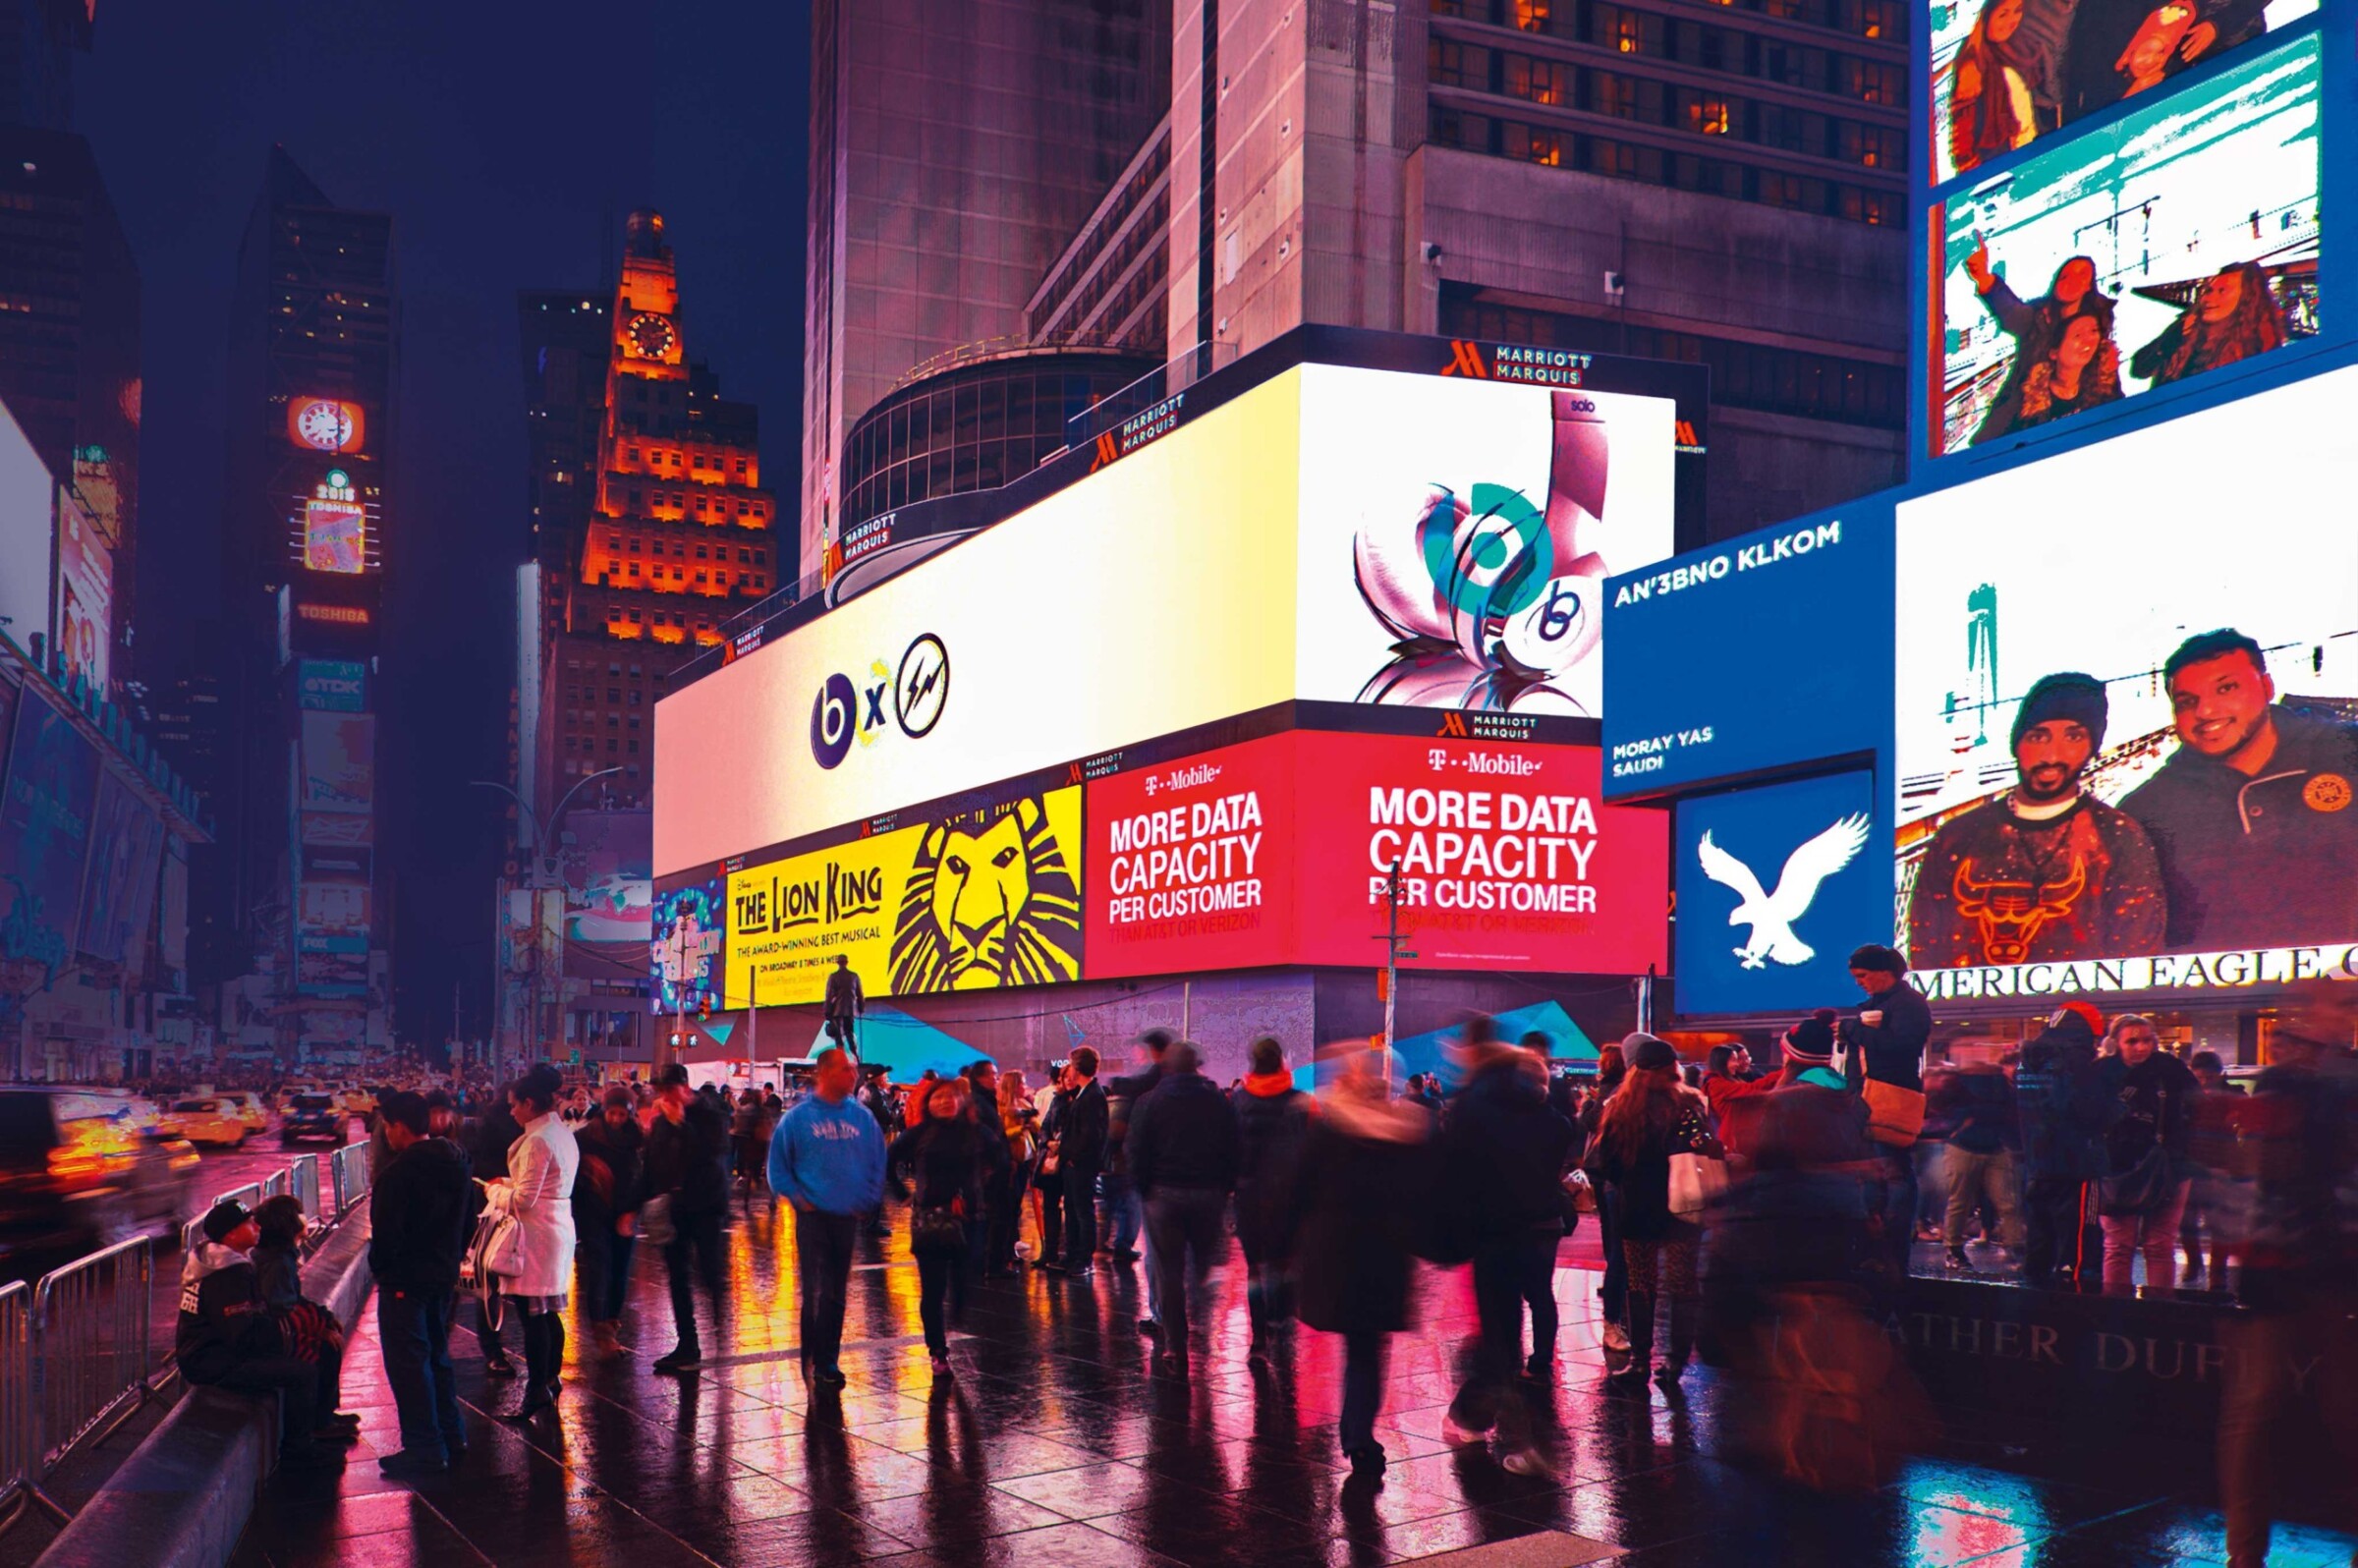 Times Square New York. 23.8 million pixels, 4064″ screen diagonal.